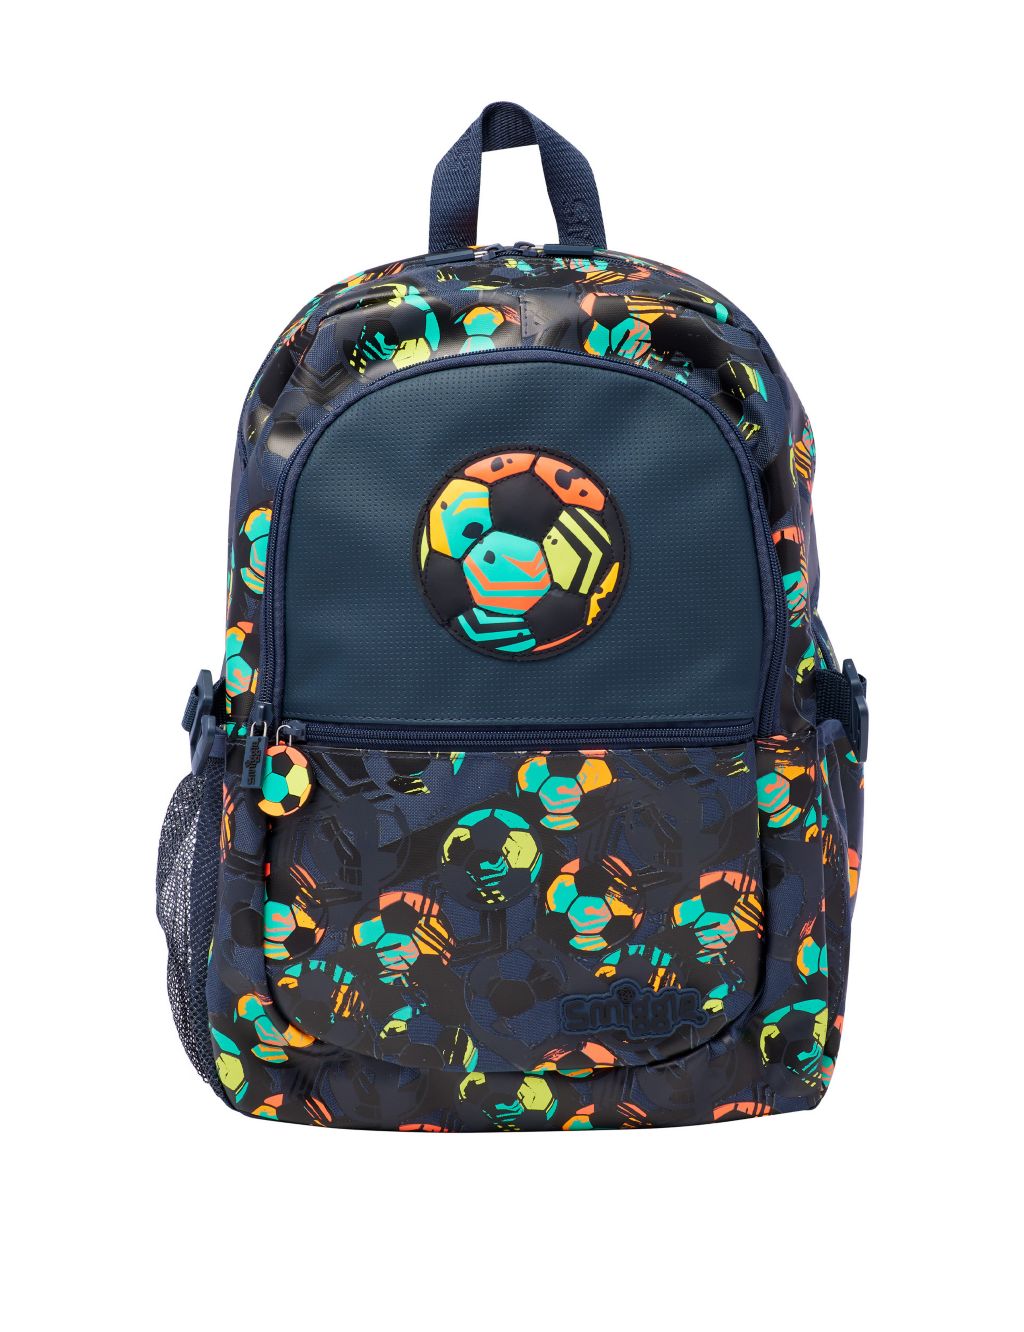 Kids' Patterned Backpack (3+ Yrs)